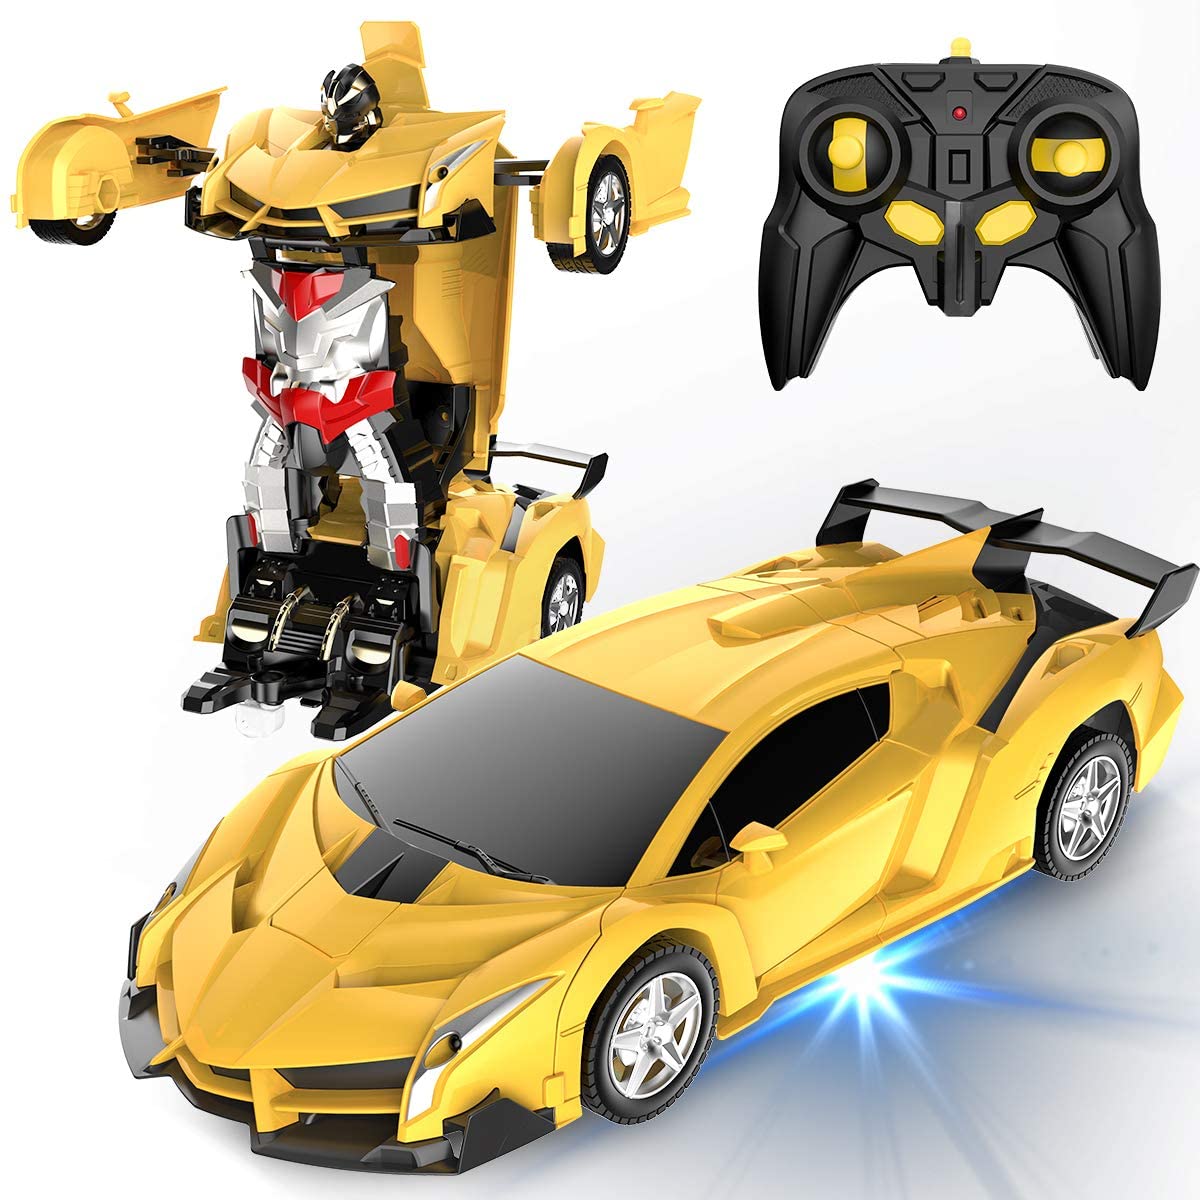 Review of Desuccus Transform Robot RC Cars for Kids